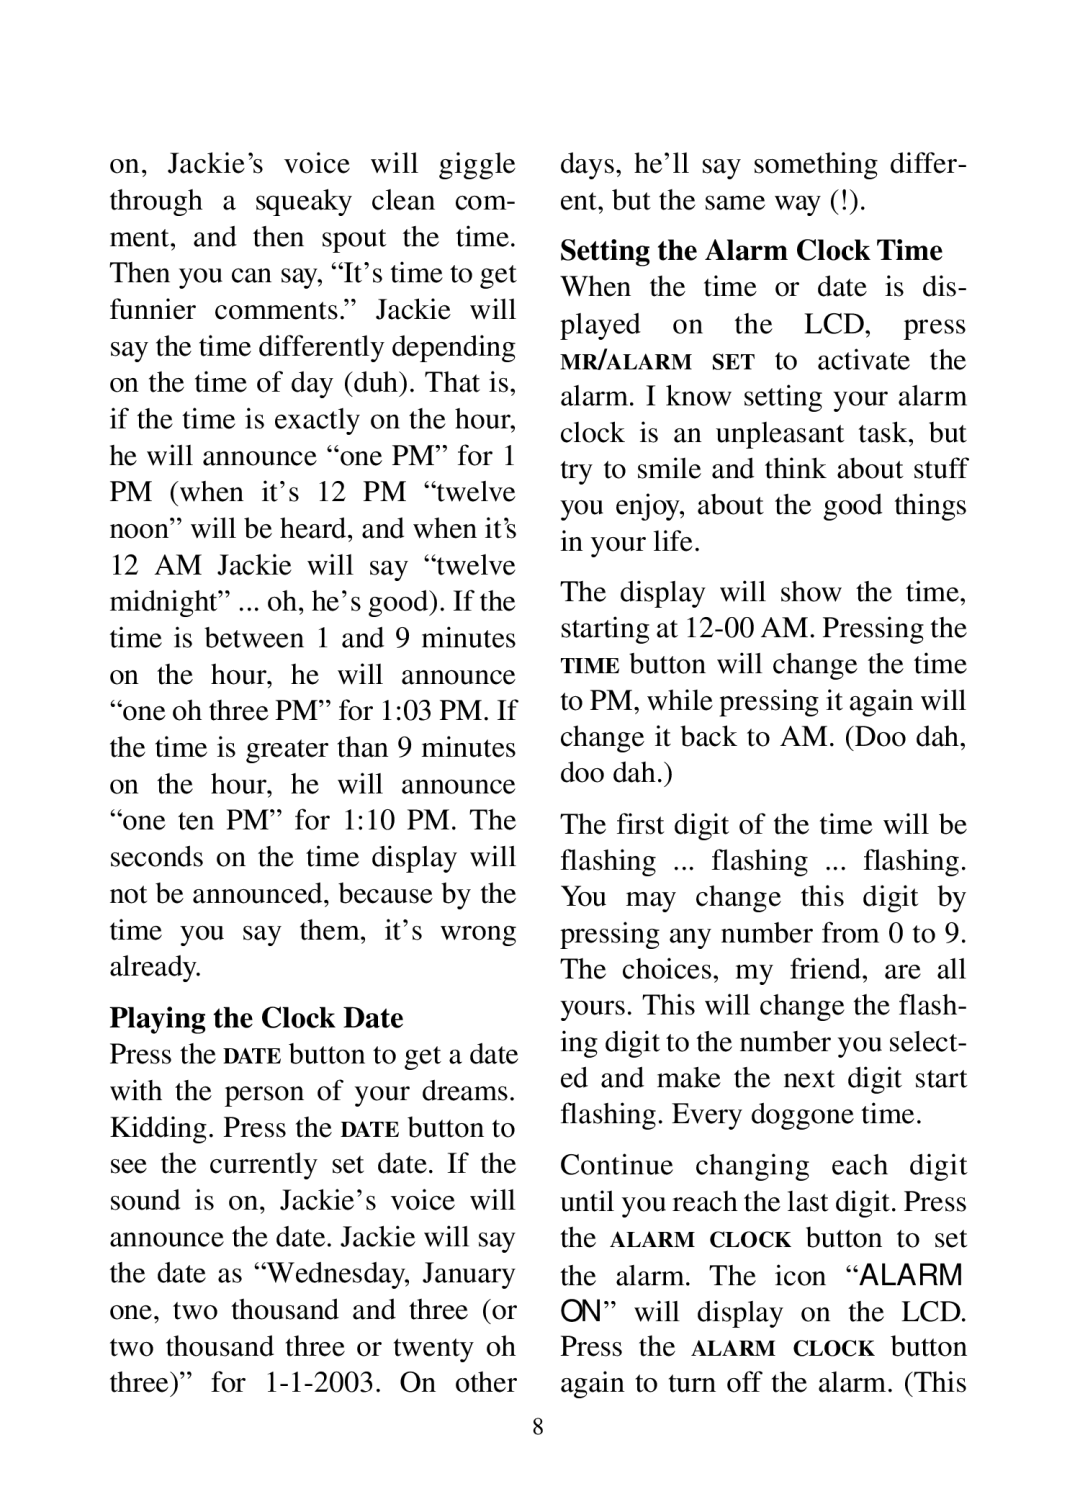 Excalibur electronic JK01 manual Playing the Clock Date, Setting the Alarm Clock Time 